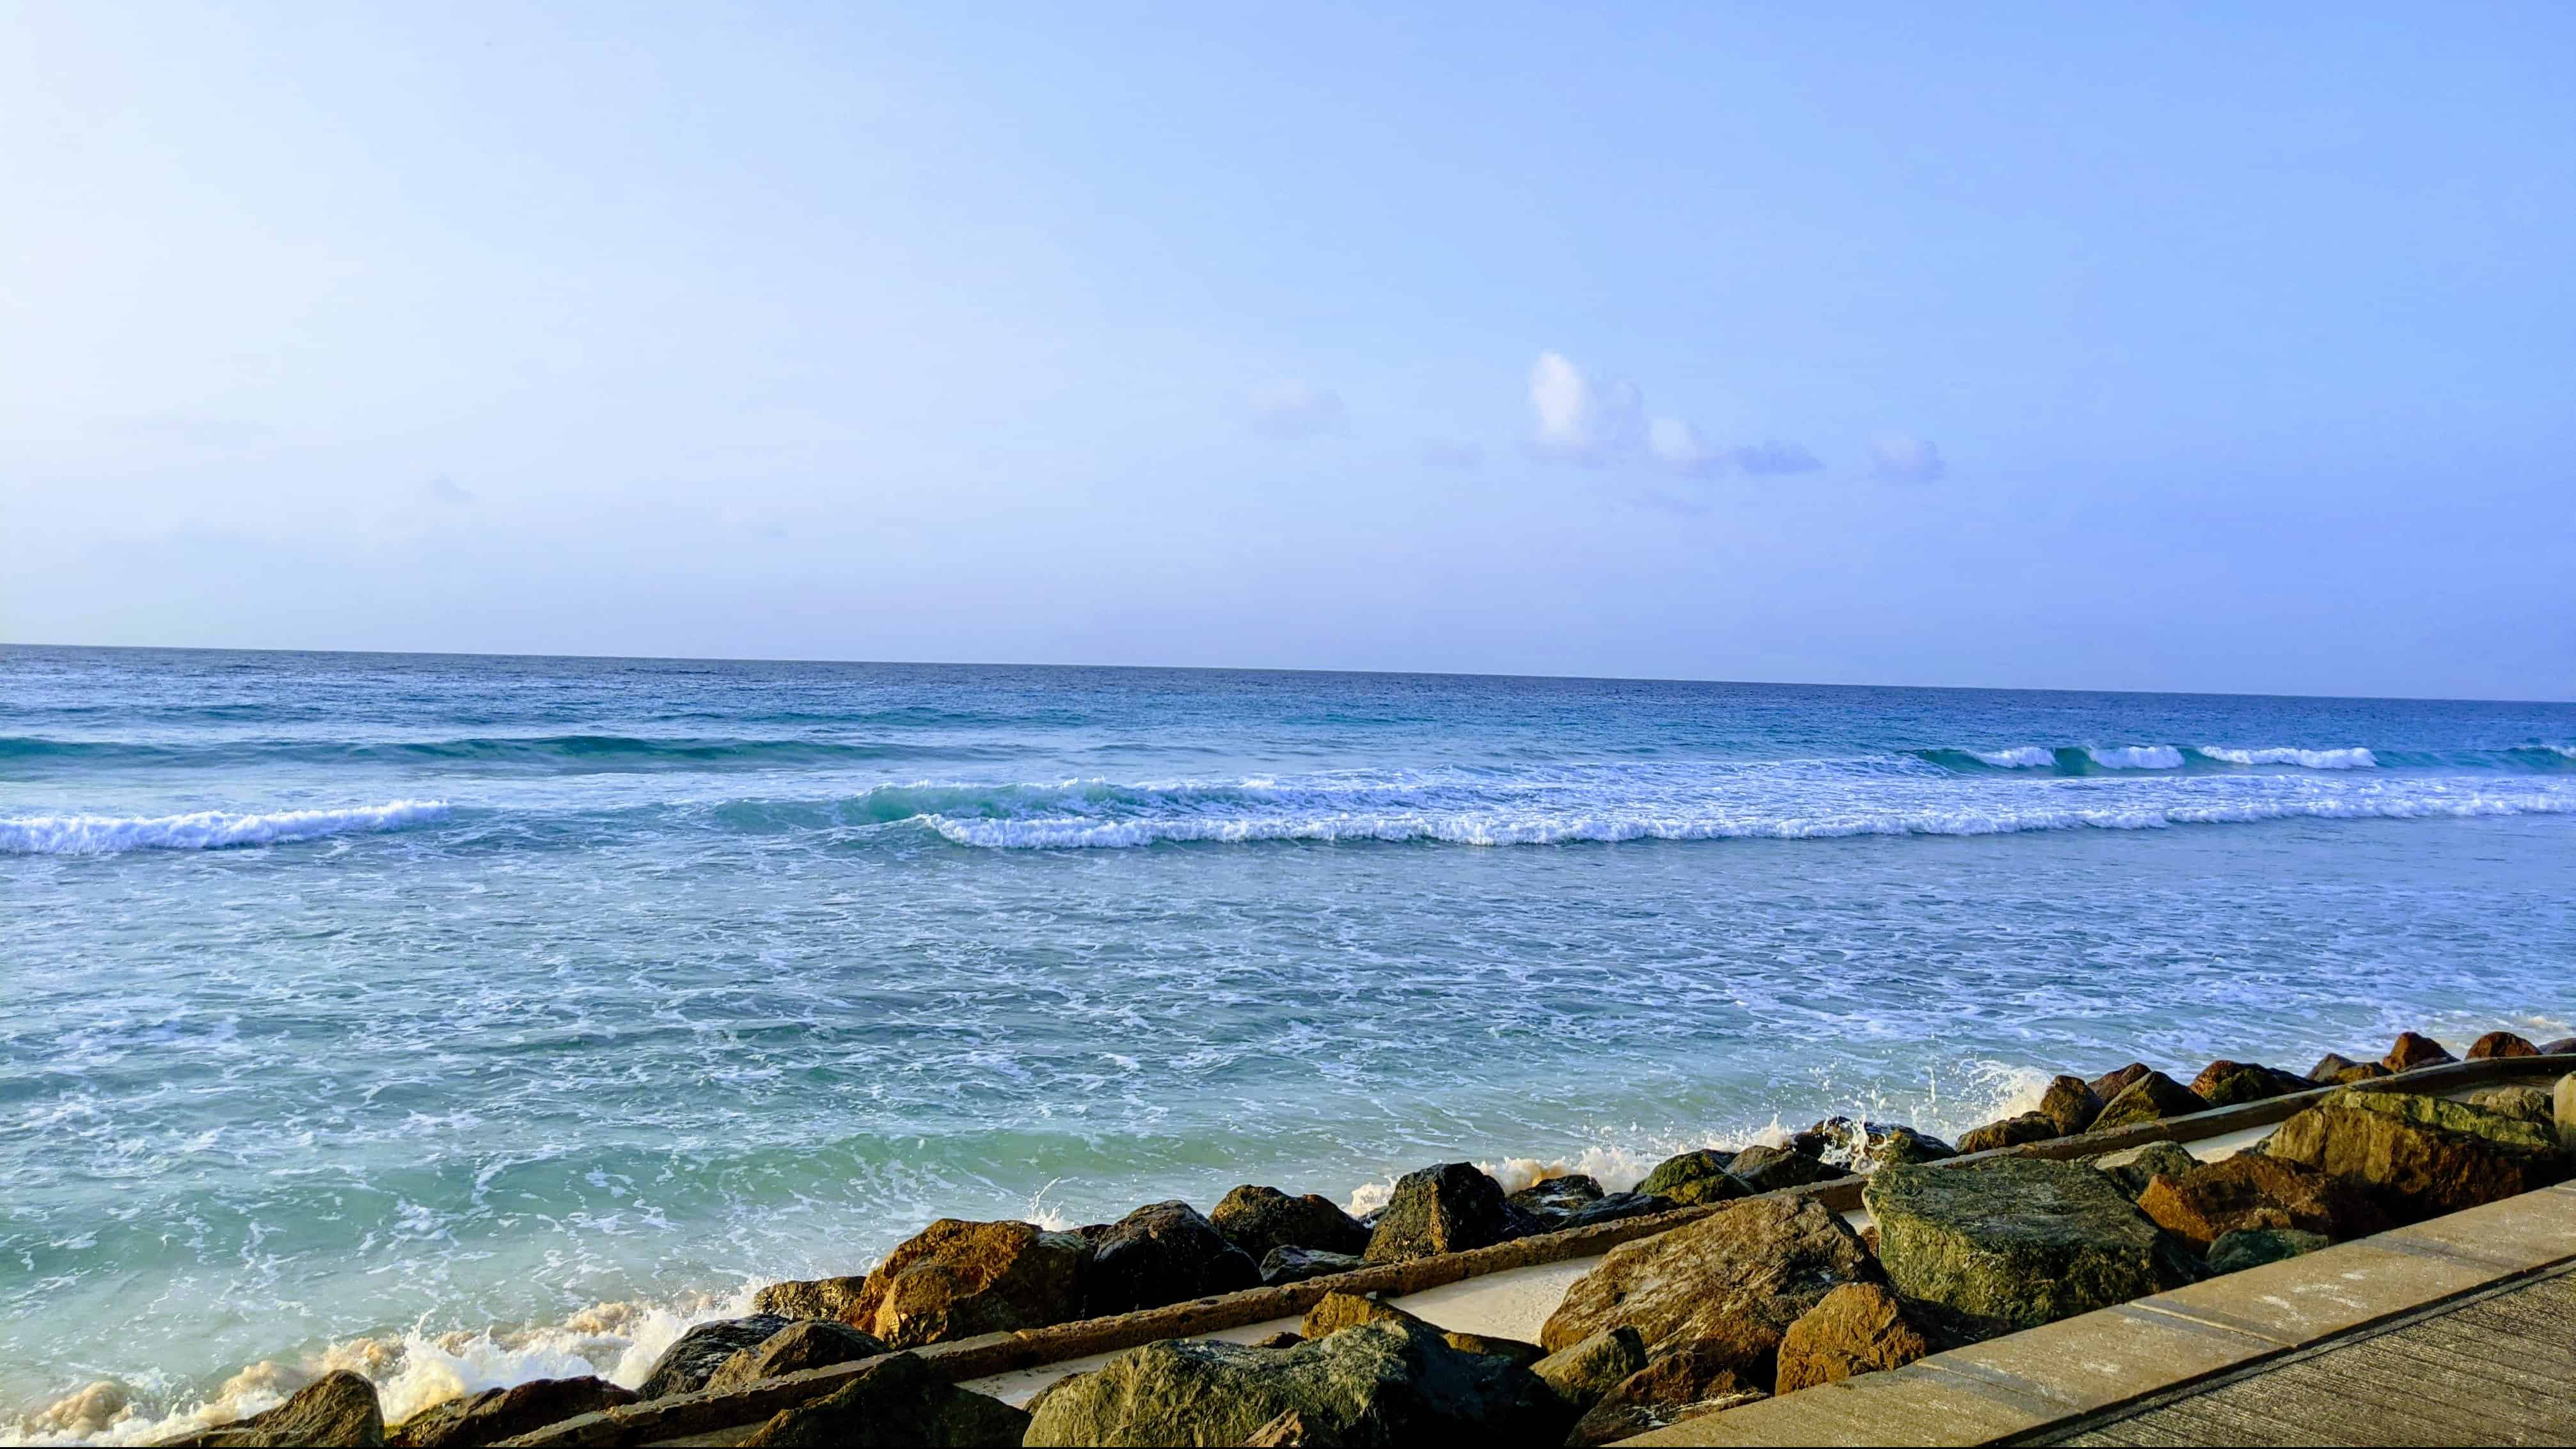 Barbados boardwalk and beach